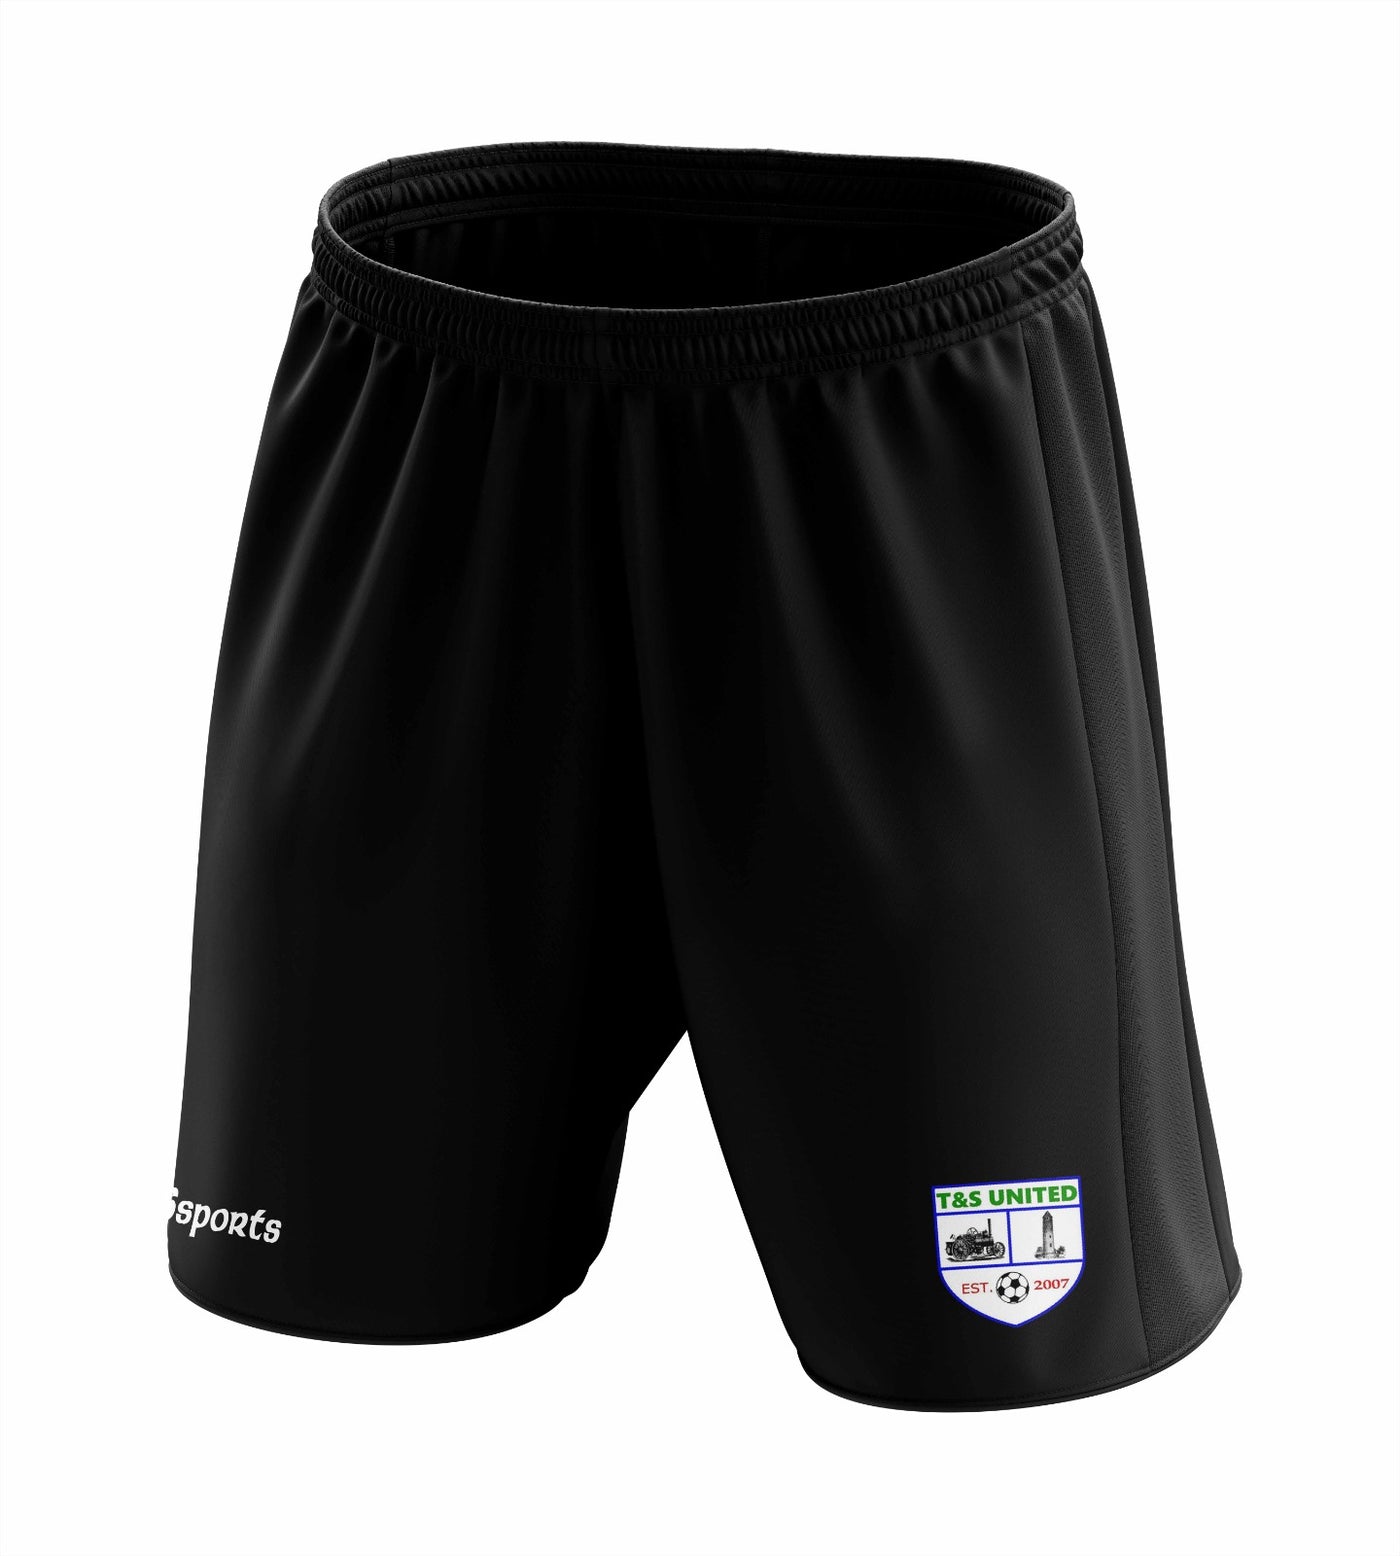 T&S United - Match Shorts